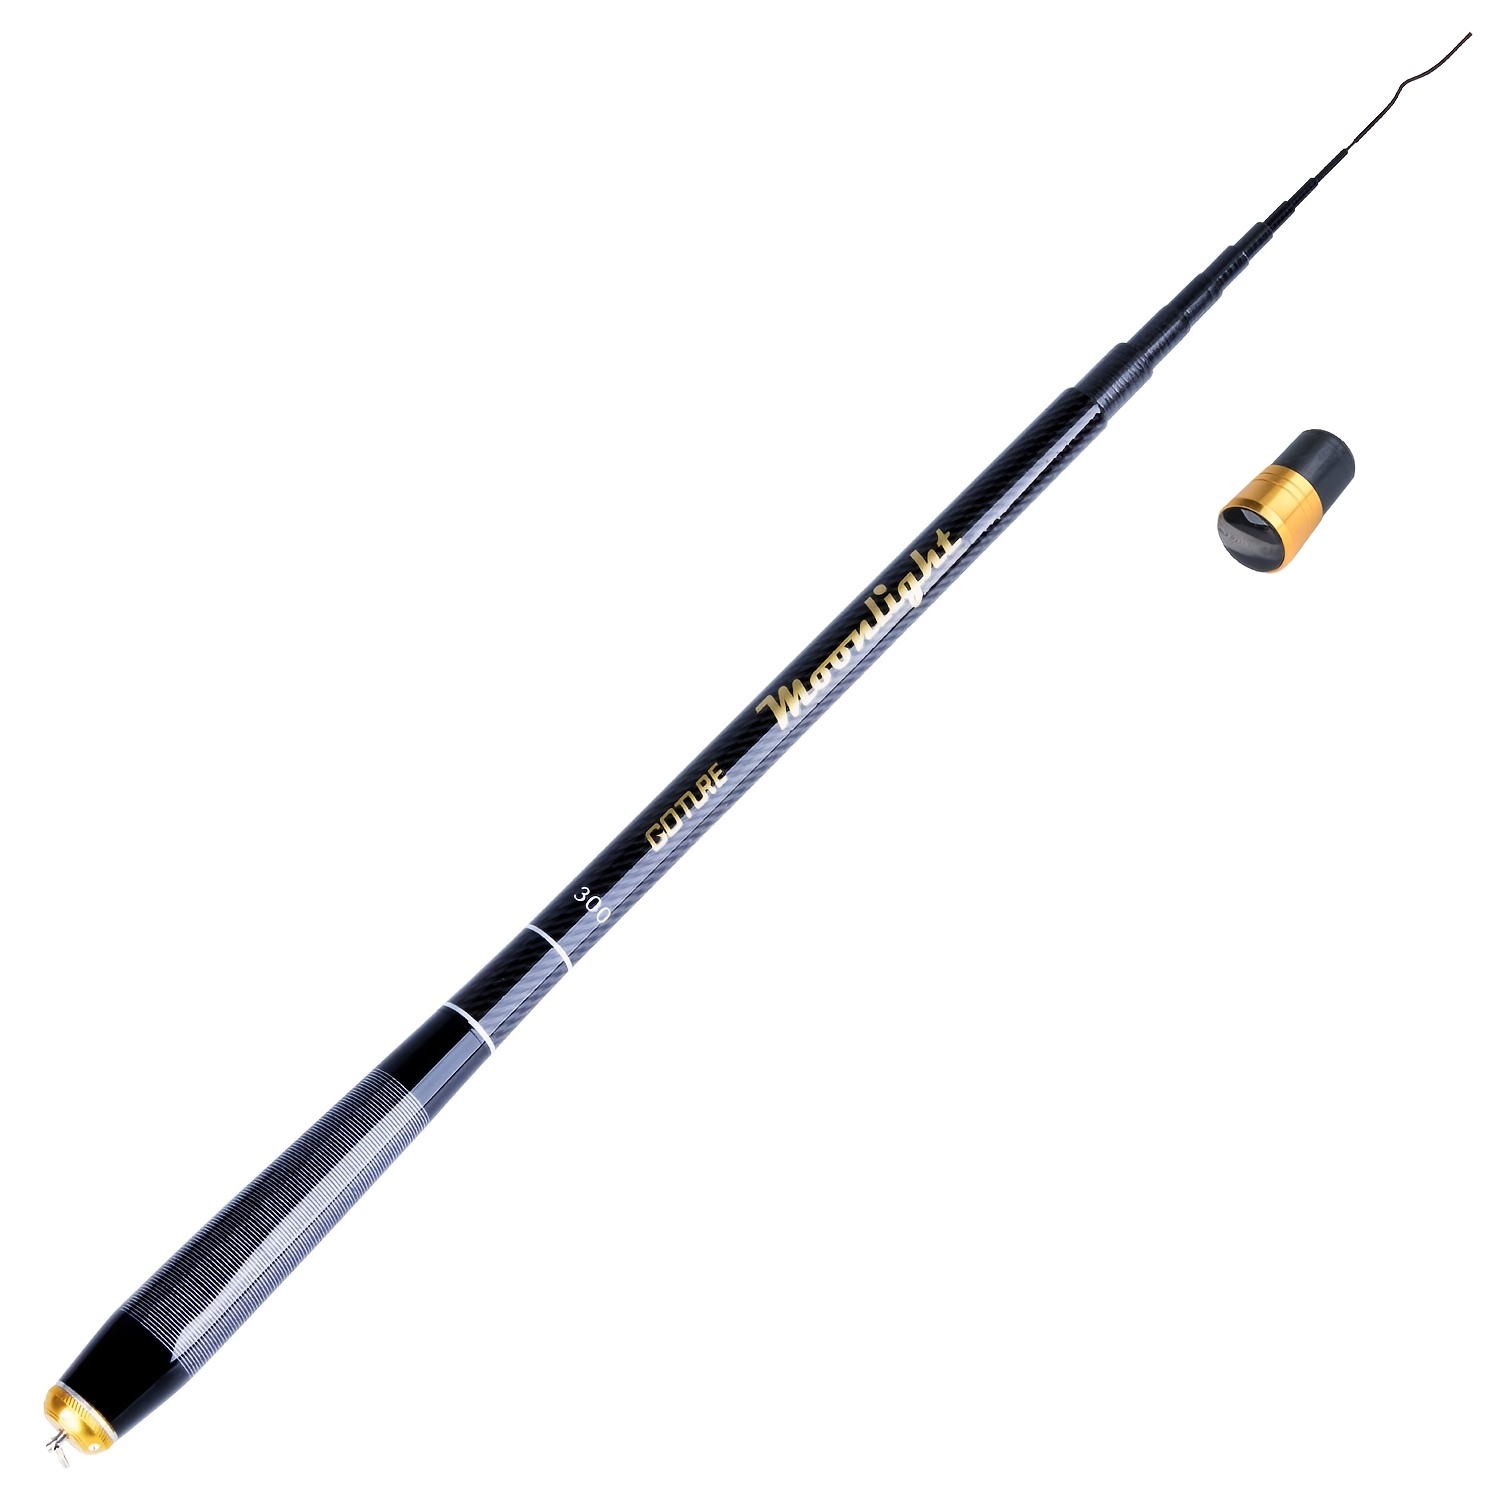 1m-2.1m Telescopic Mini Fishing Rod Ultralight Fishing Rod Carbon